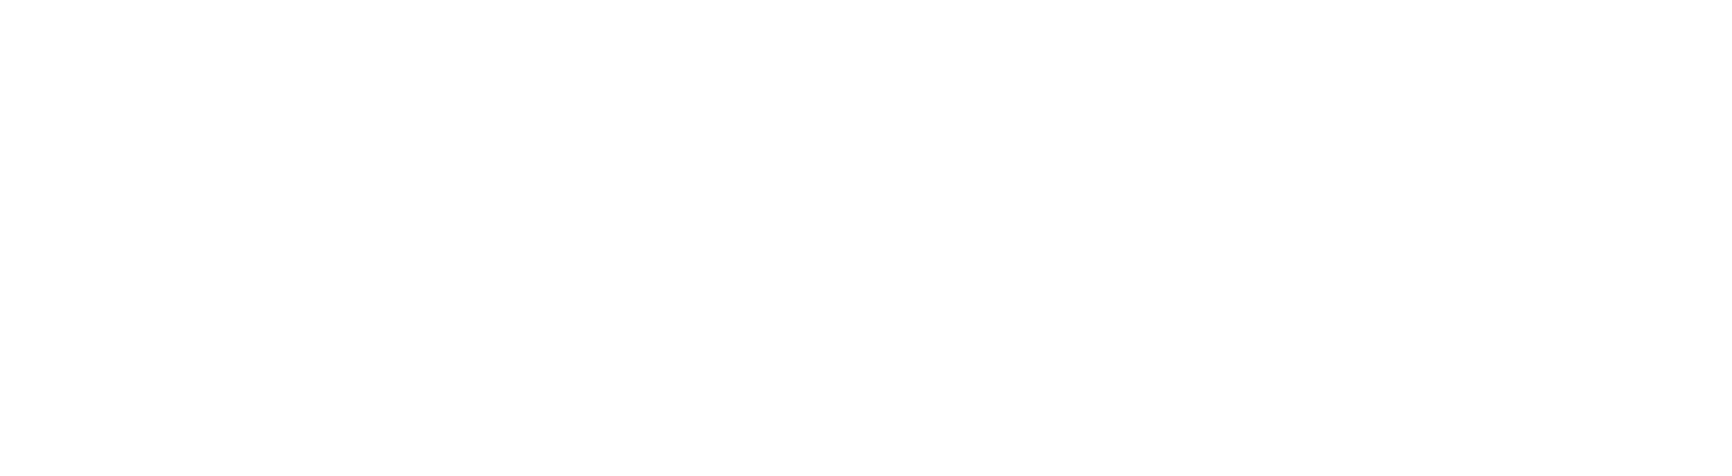 China Telecom logo large for dark backgrounds (transparent PNG)